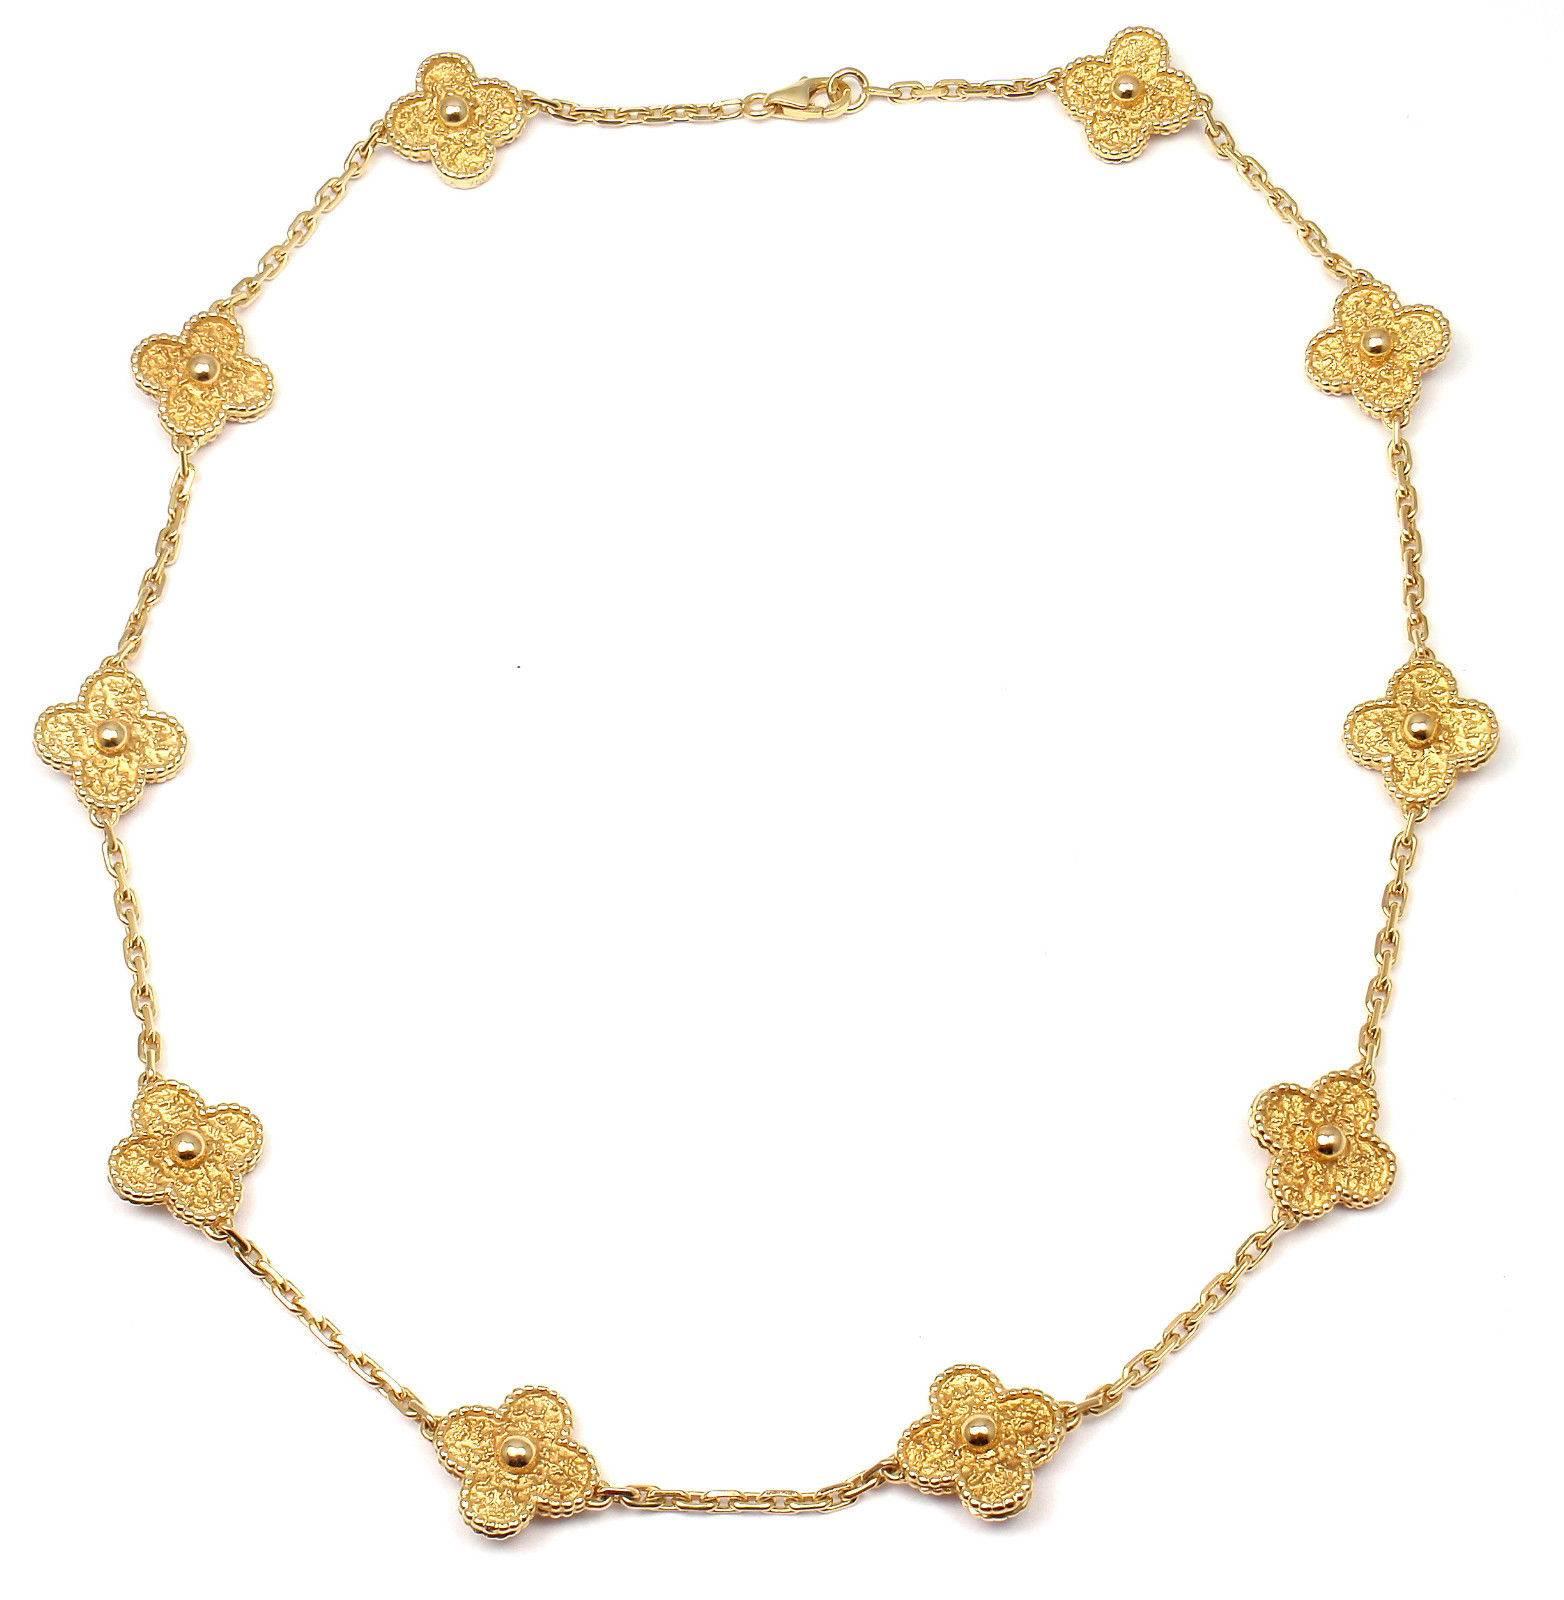 18k Yellow Gold Vintage Alhambra 10 Motif Necklace by Van Cleef & Arpels.

Details:
Length: 17